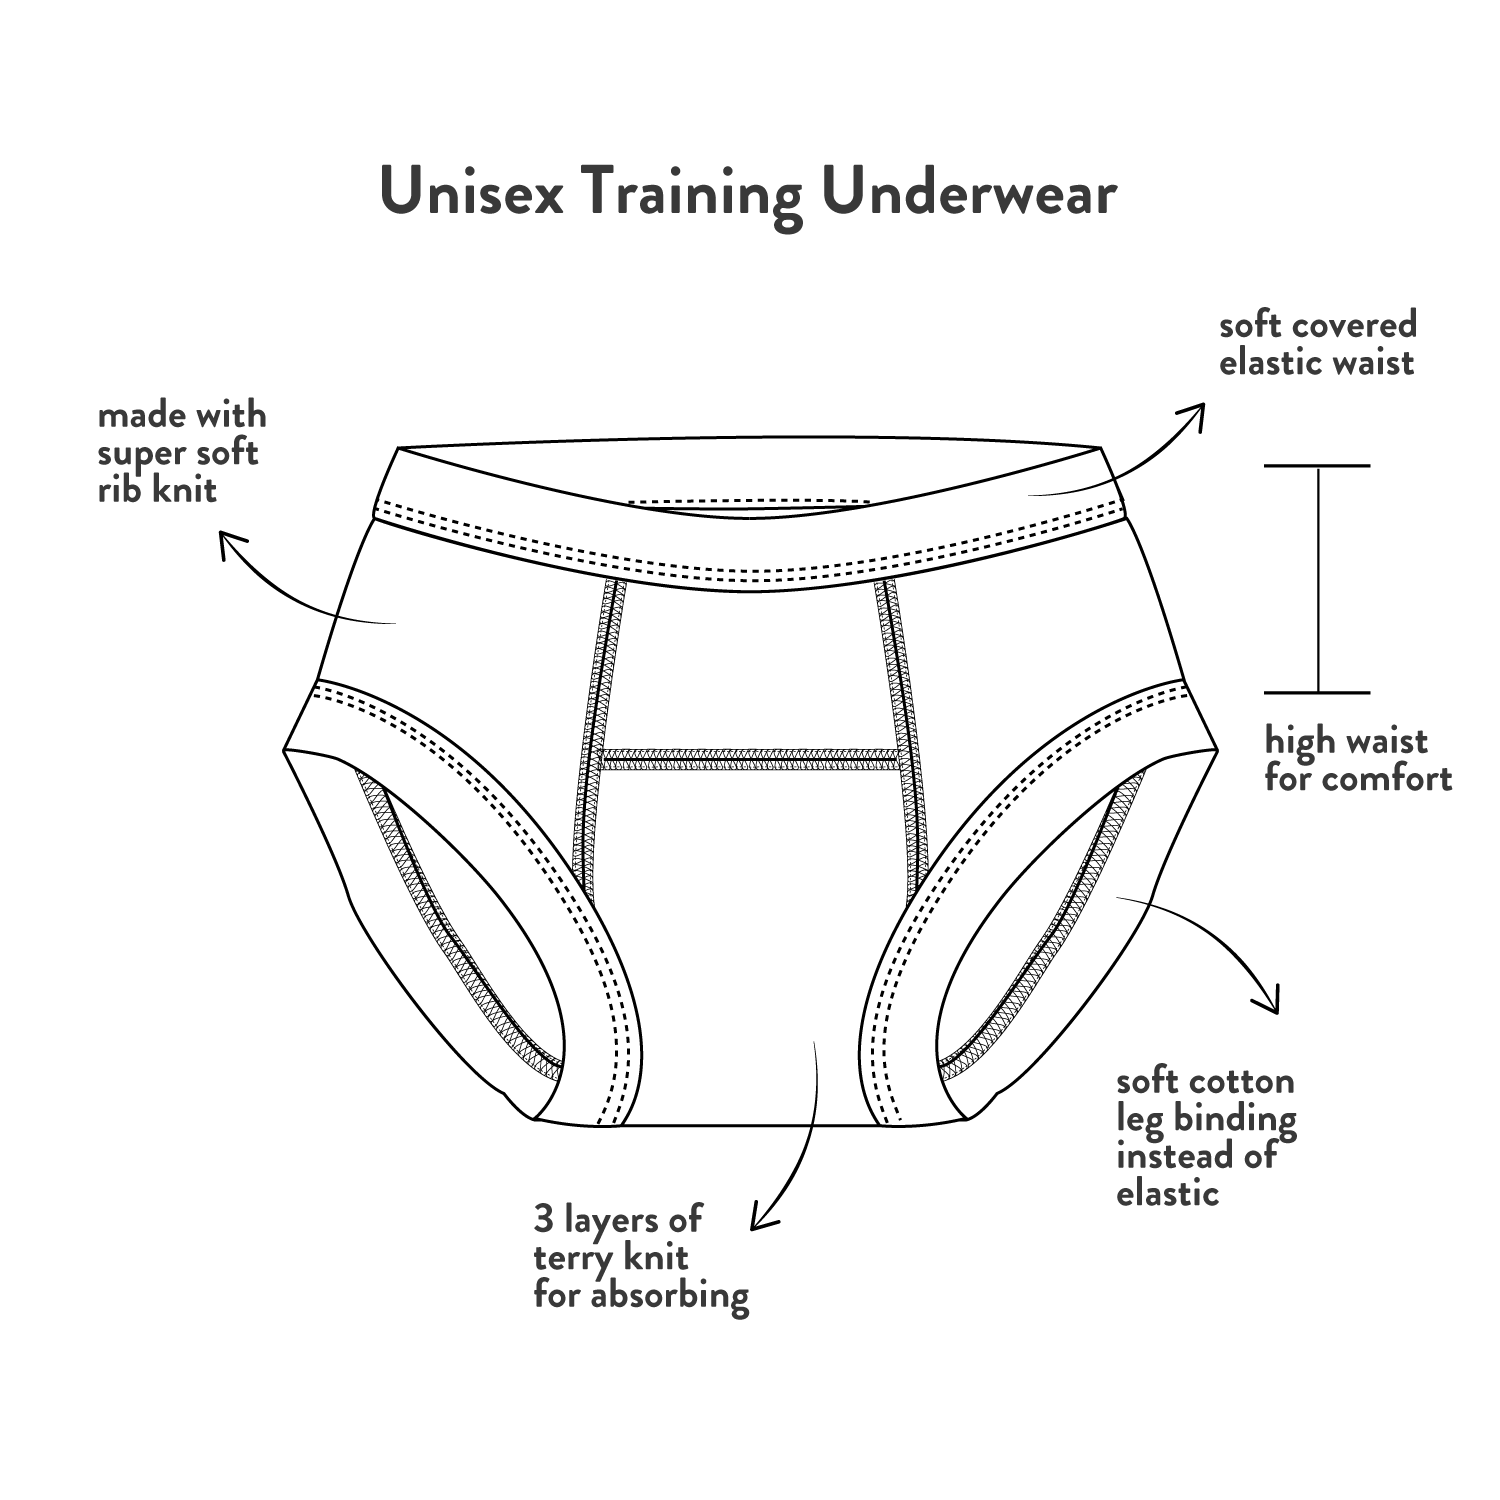 Basics For Kids Training Pants 22 ea, Wipes, Refills & Accessories